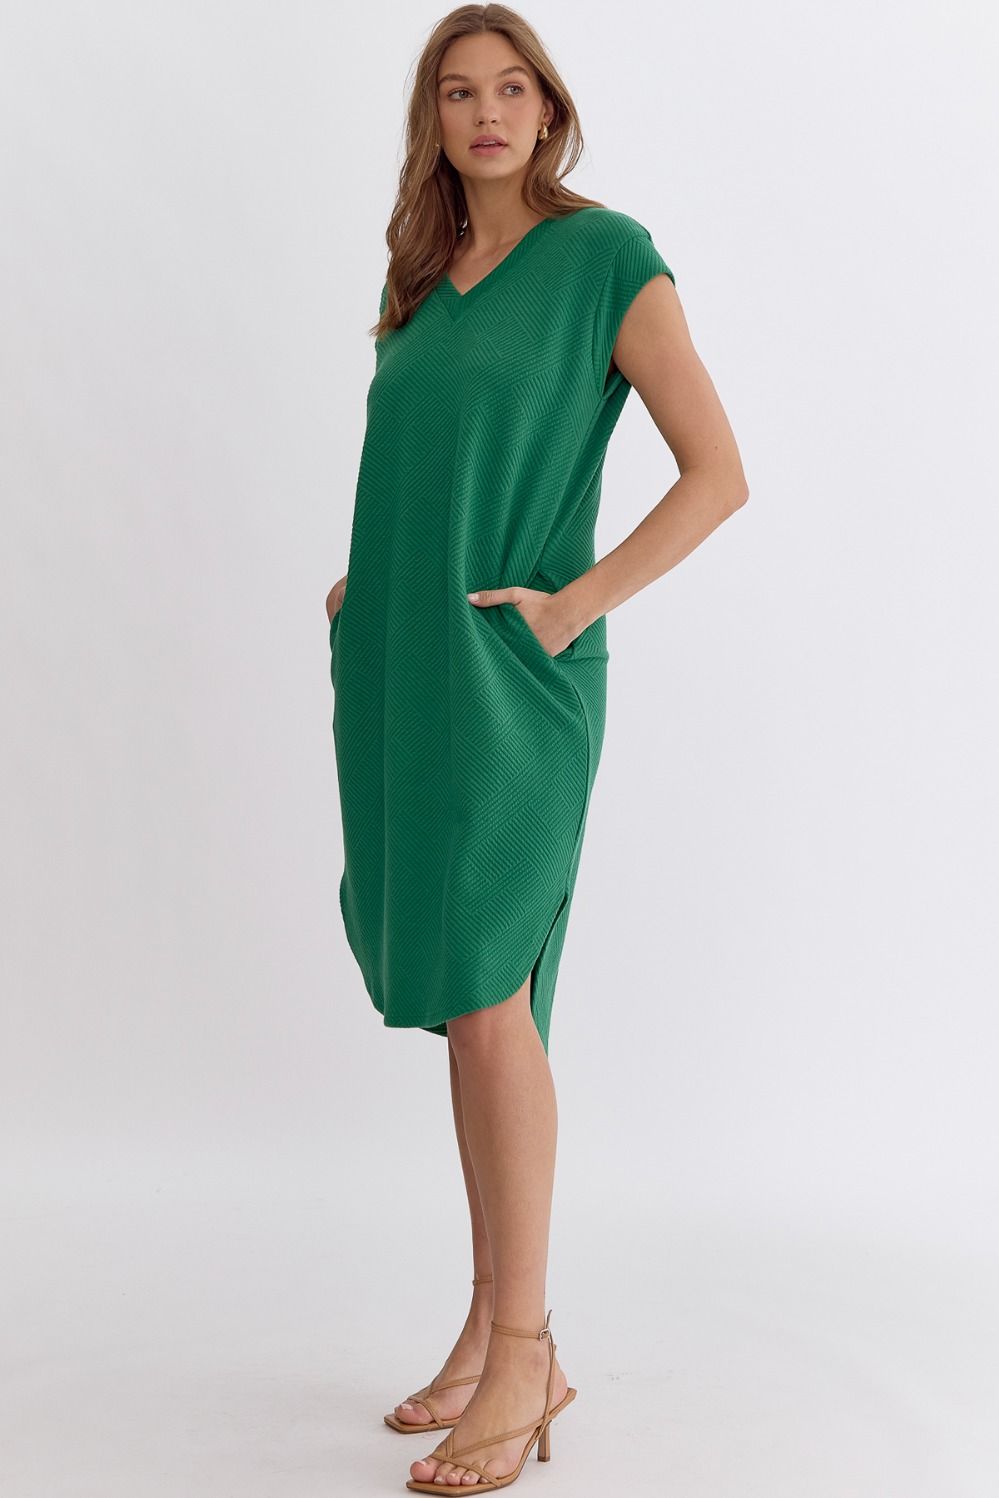 Green Piper Dress